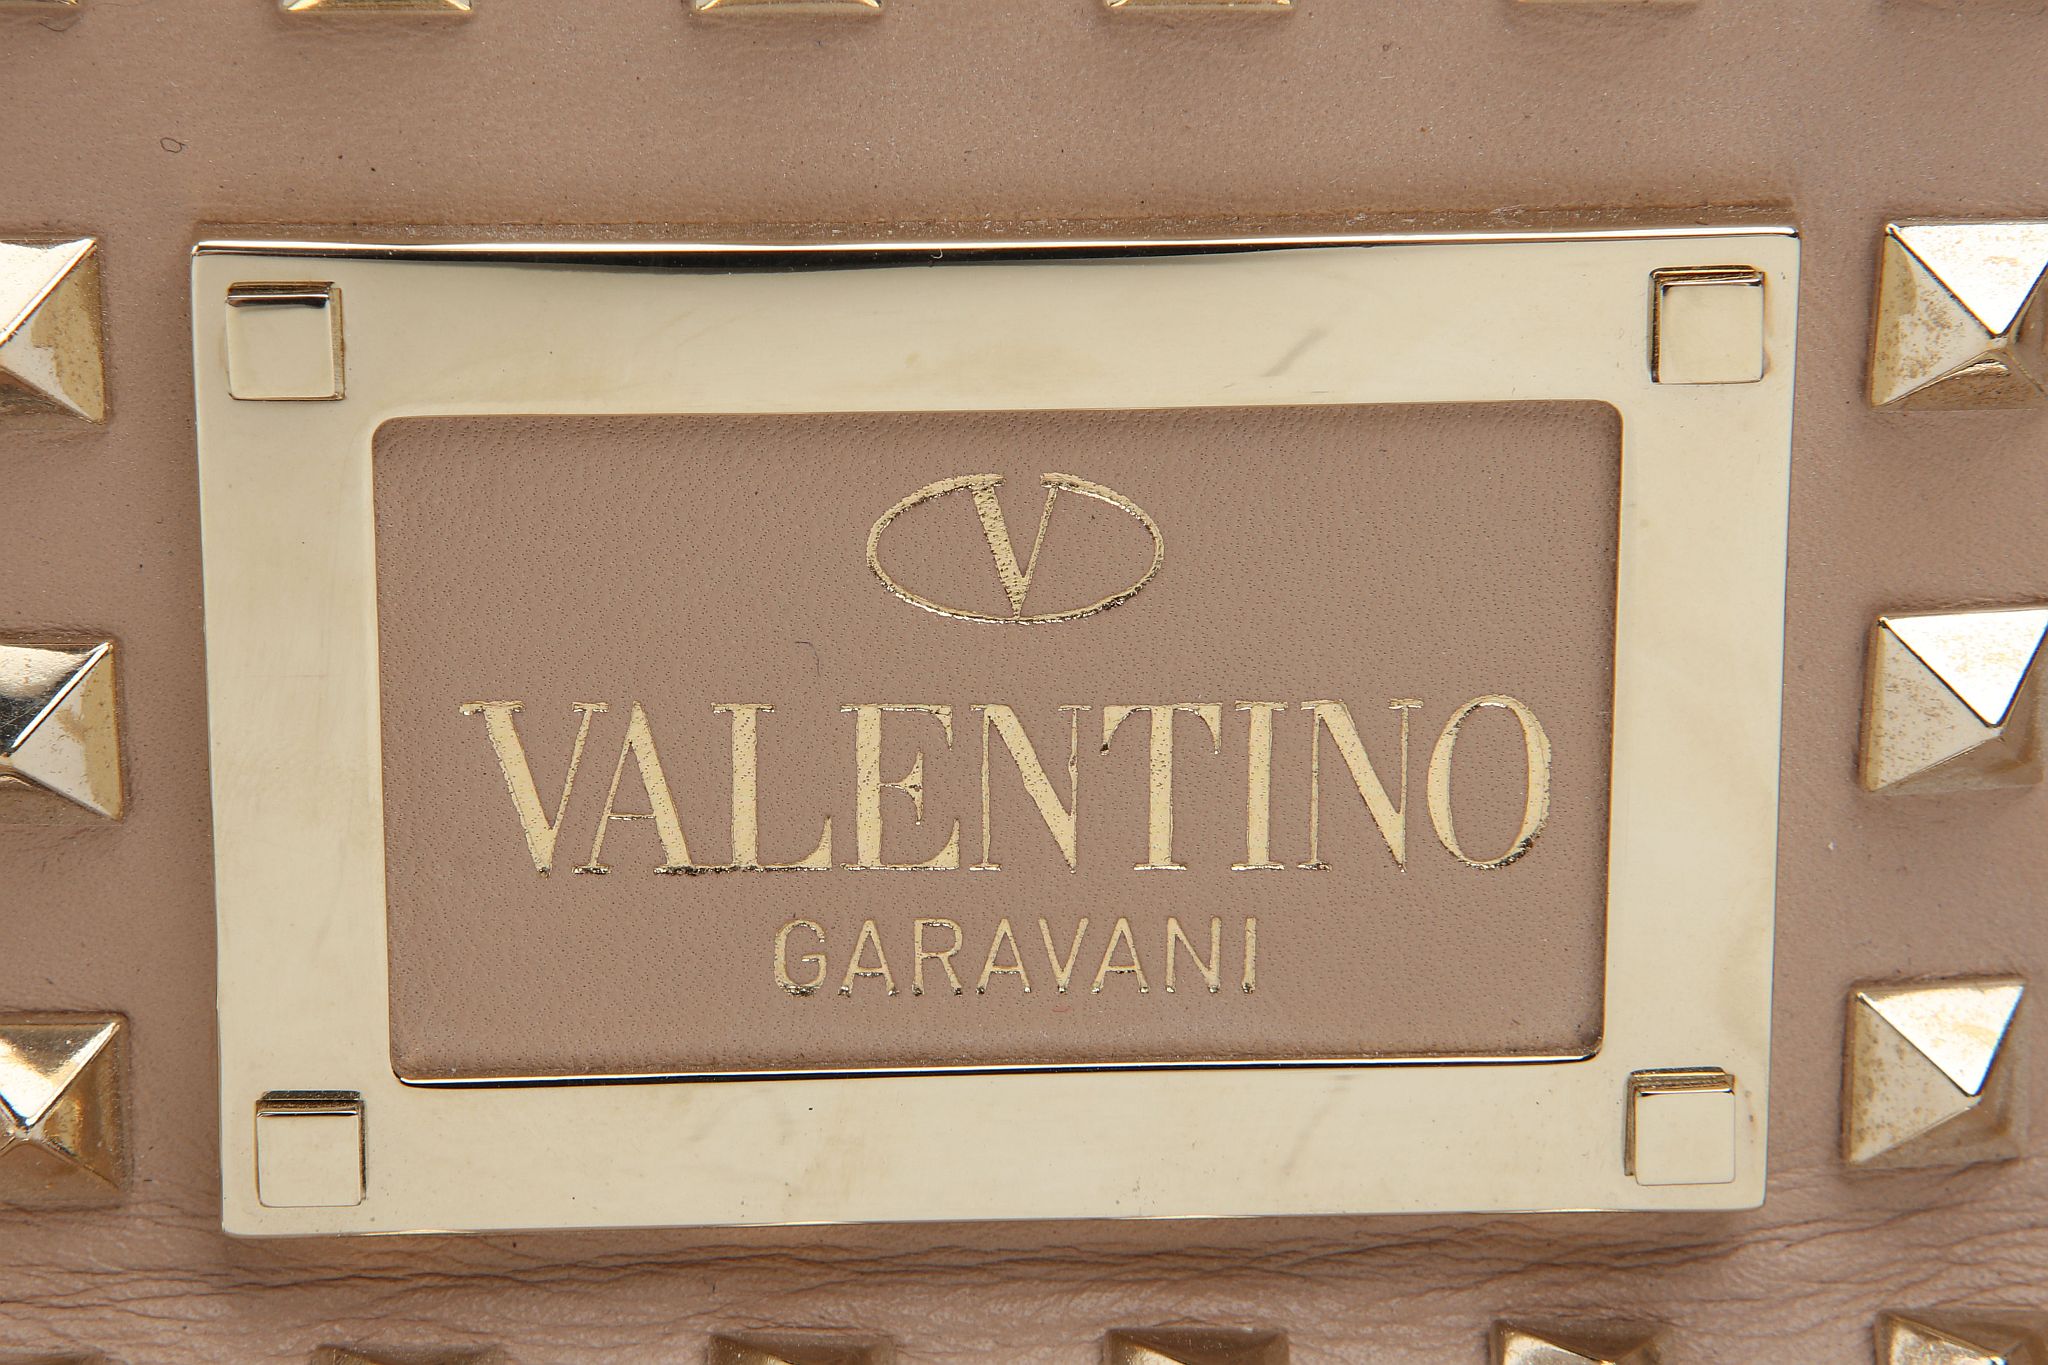 VALENTINO ROCKSTUD SHOULDER BAG, nude leather with all over chrome stud decoration, 32cm wide, - Image 5 of 12